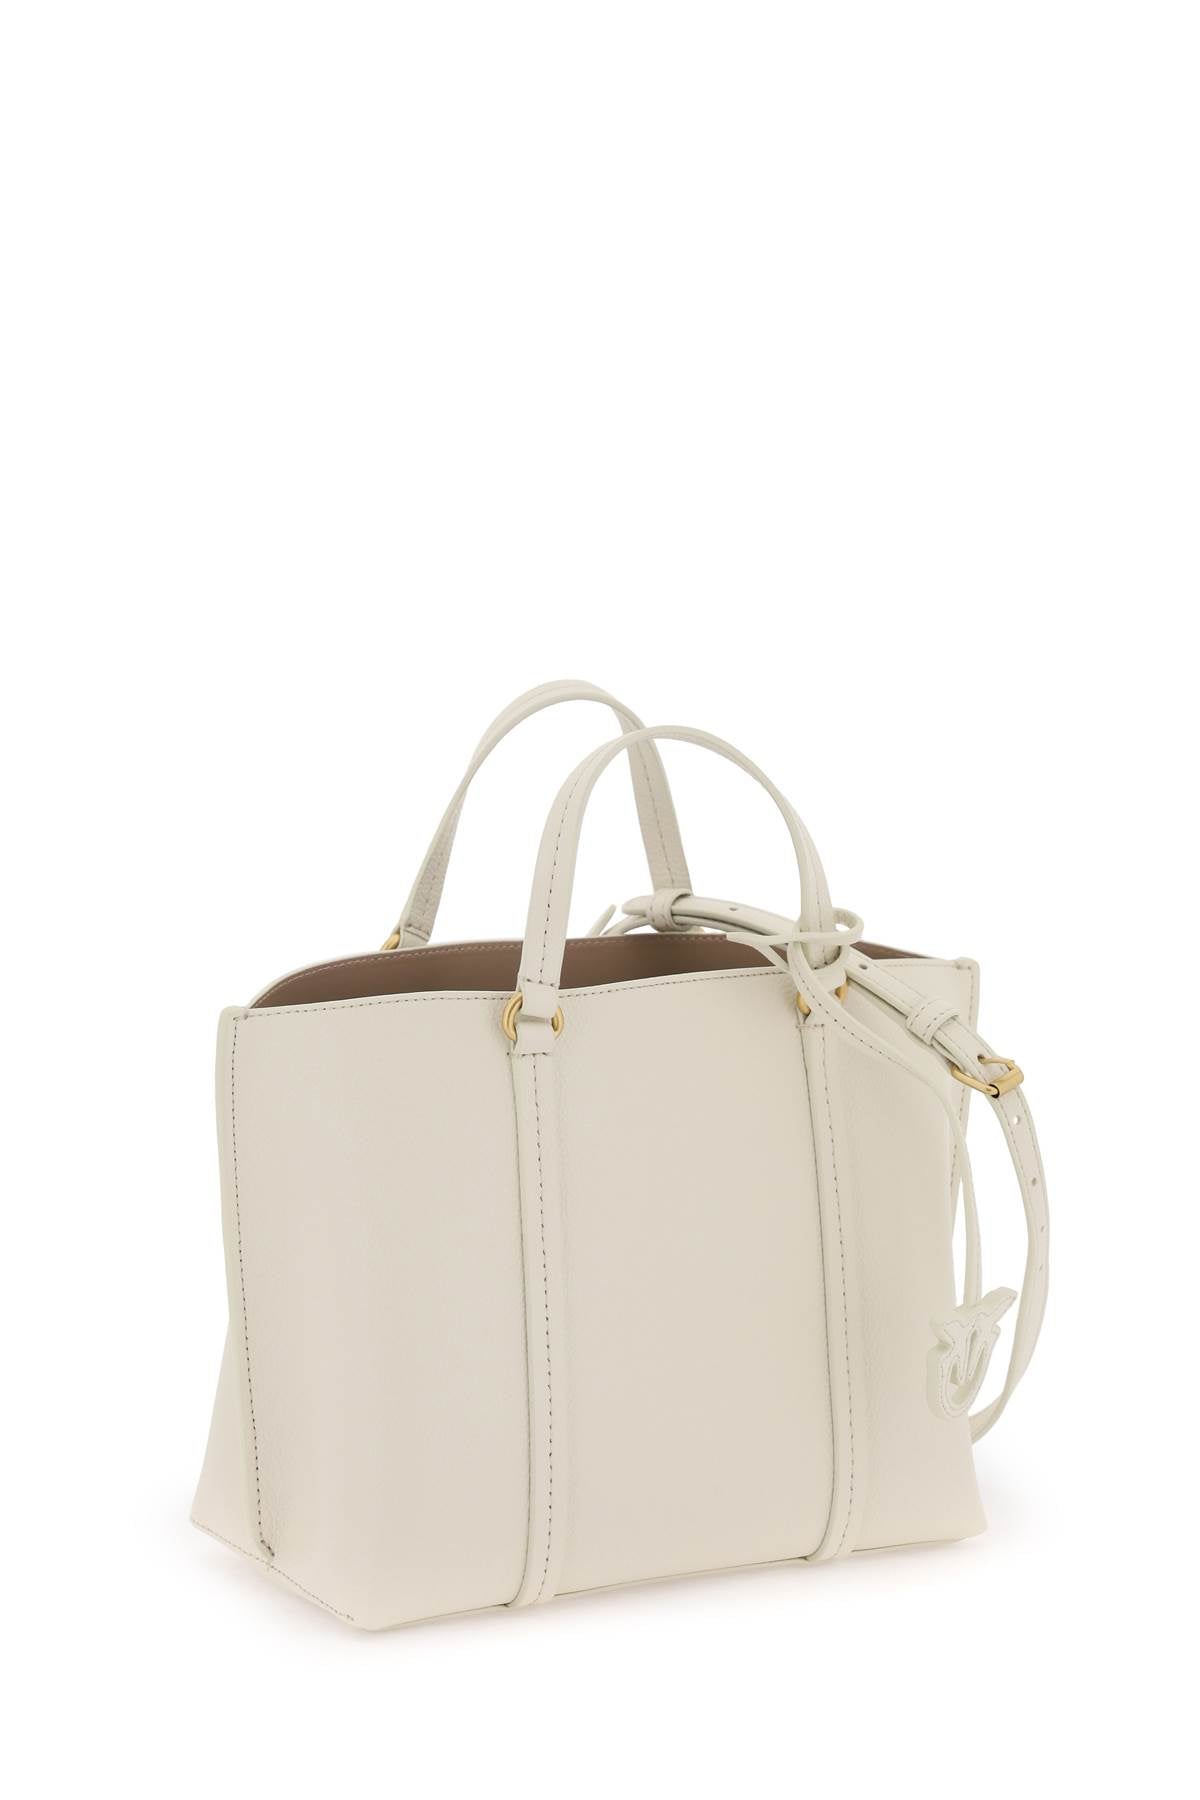 Pinko carrie shopper classic handbag-2